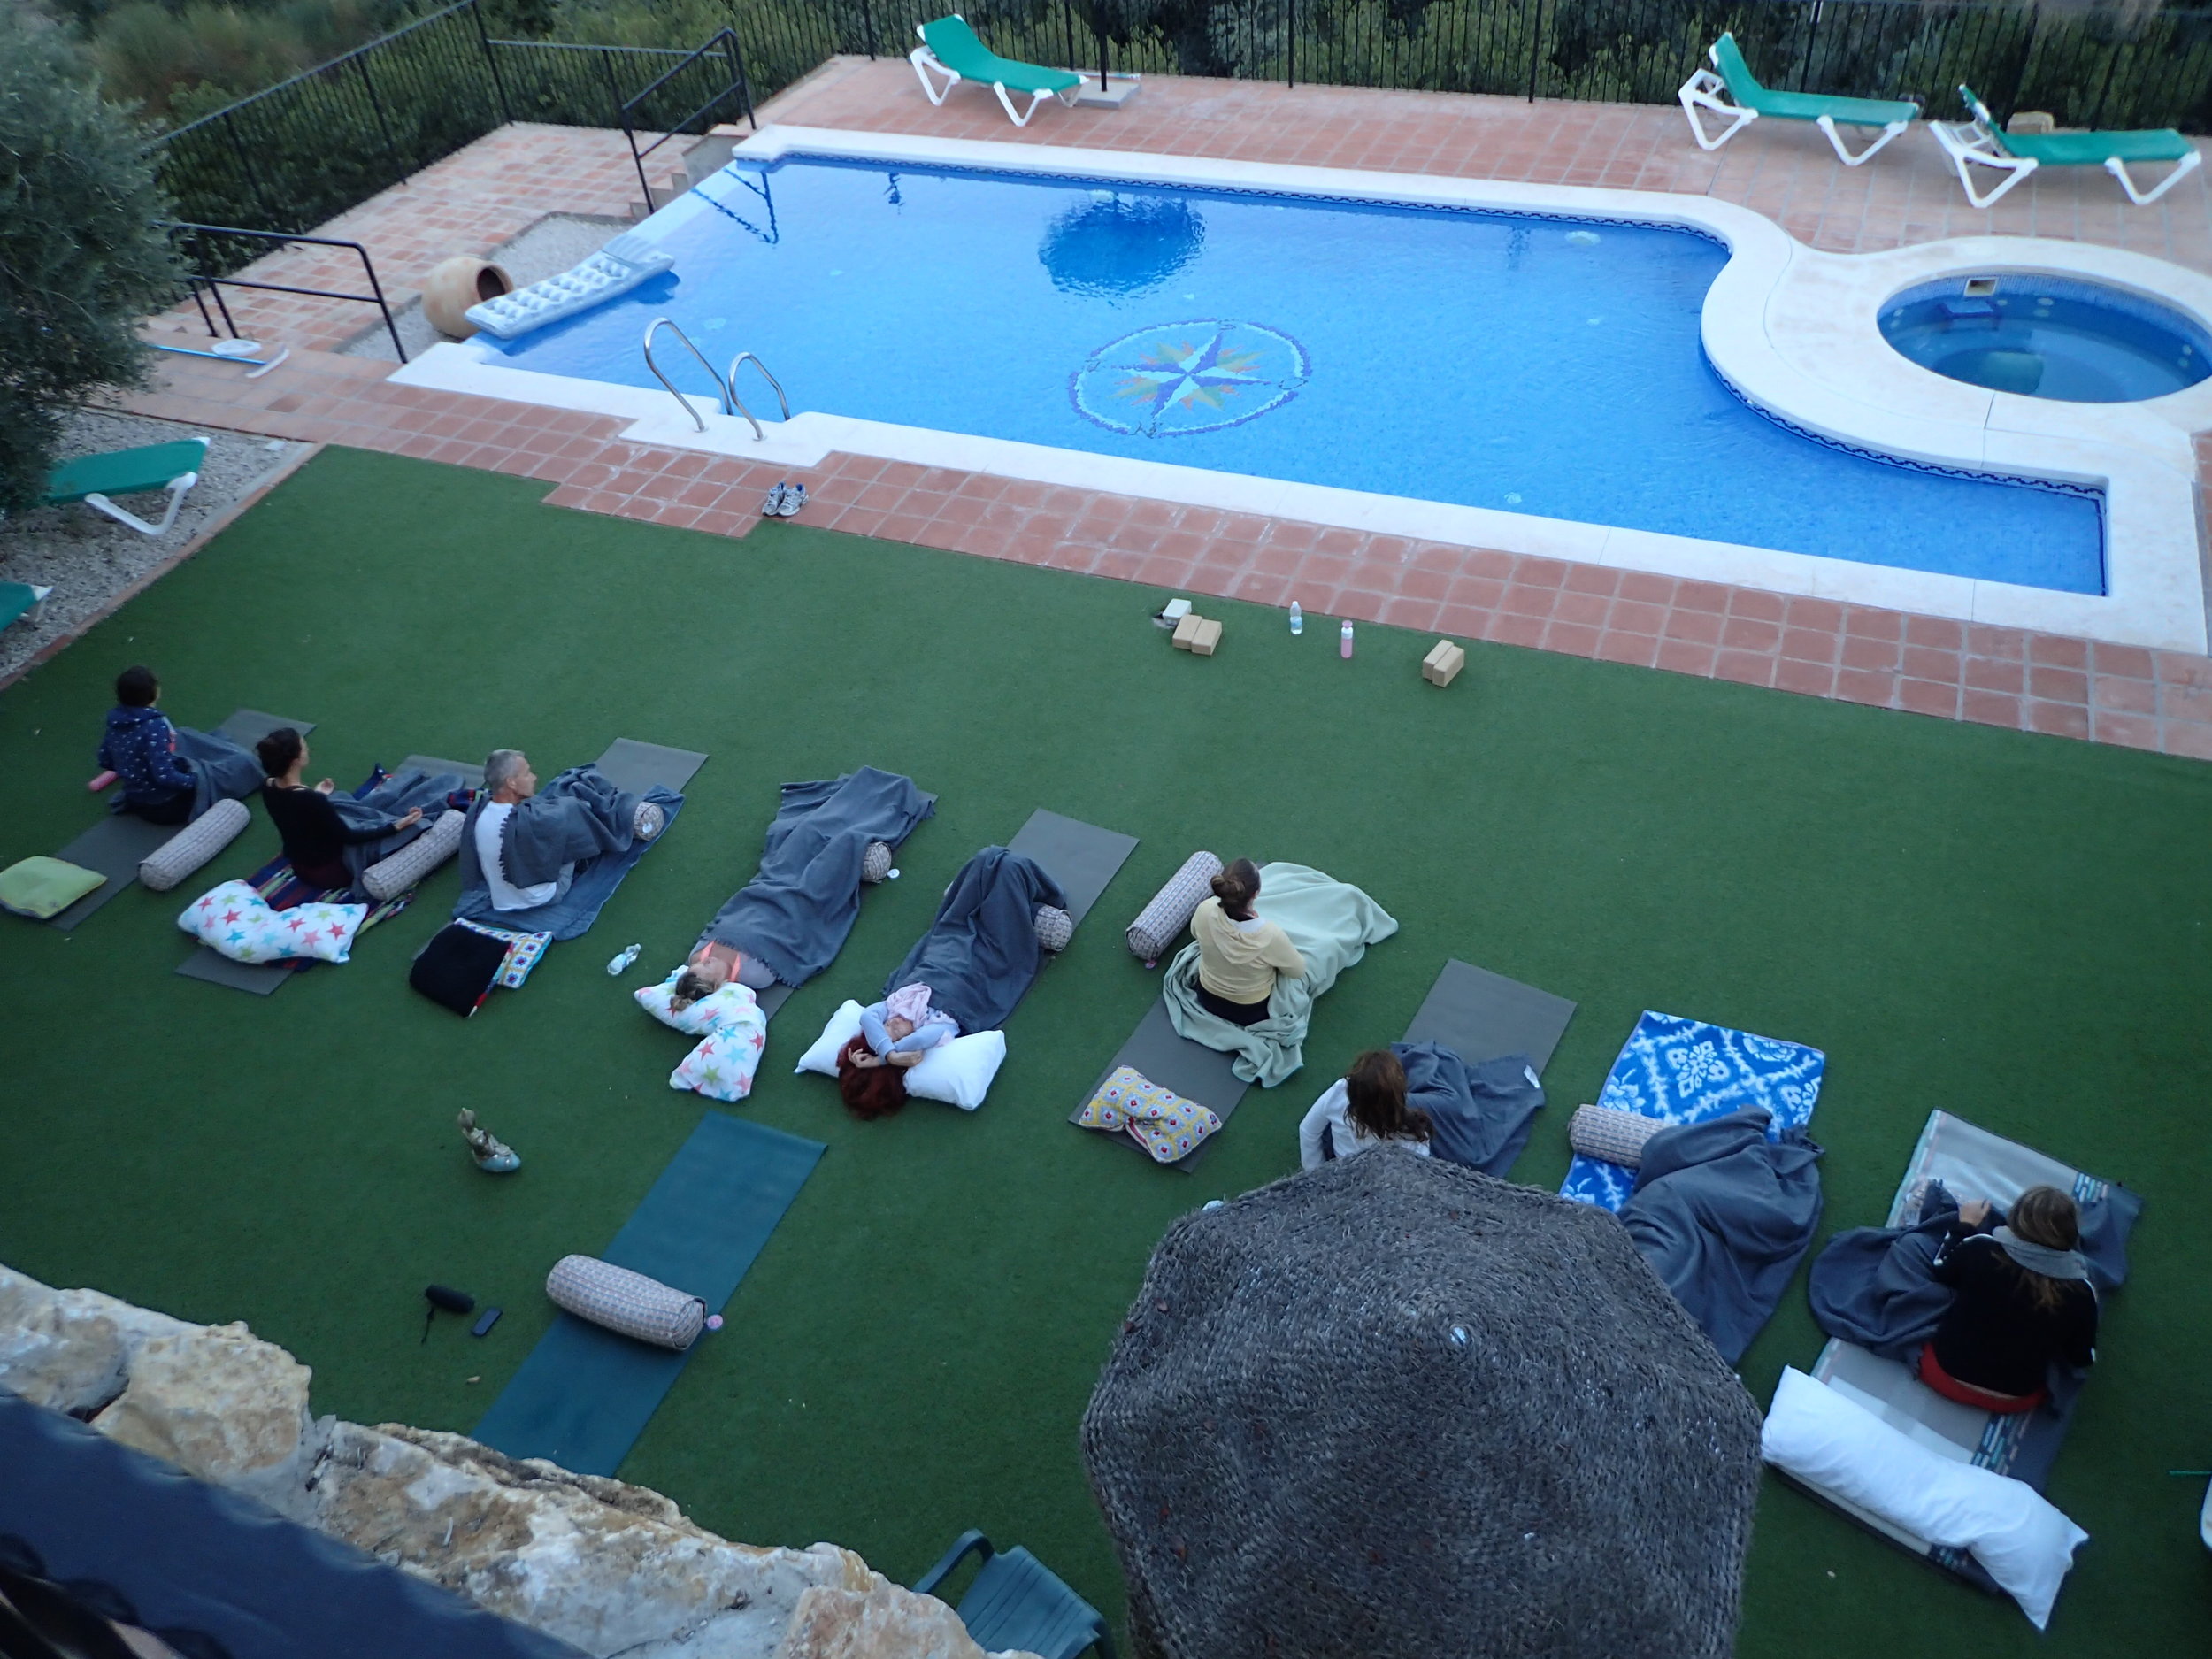 Yoga Nidra at pool at Yin Yang Yoga retreat in the Malaga mountains in Spain with Jane Bakx Yoga